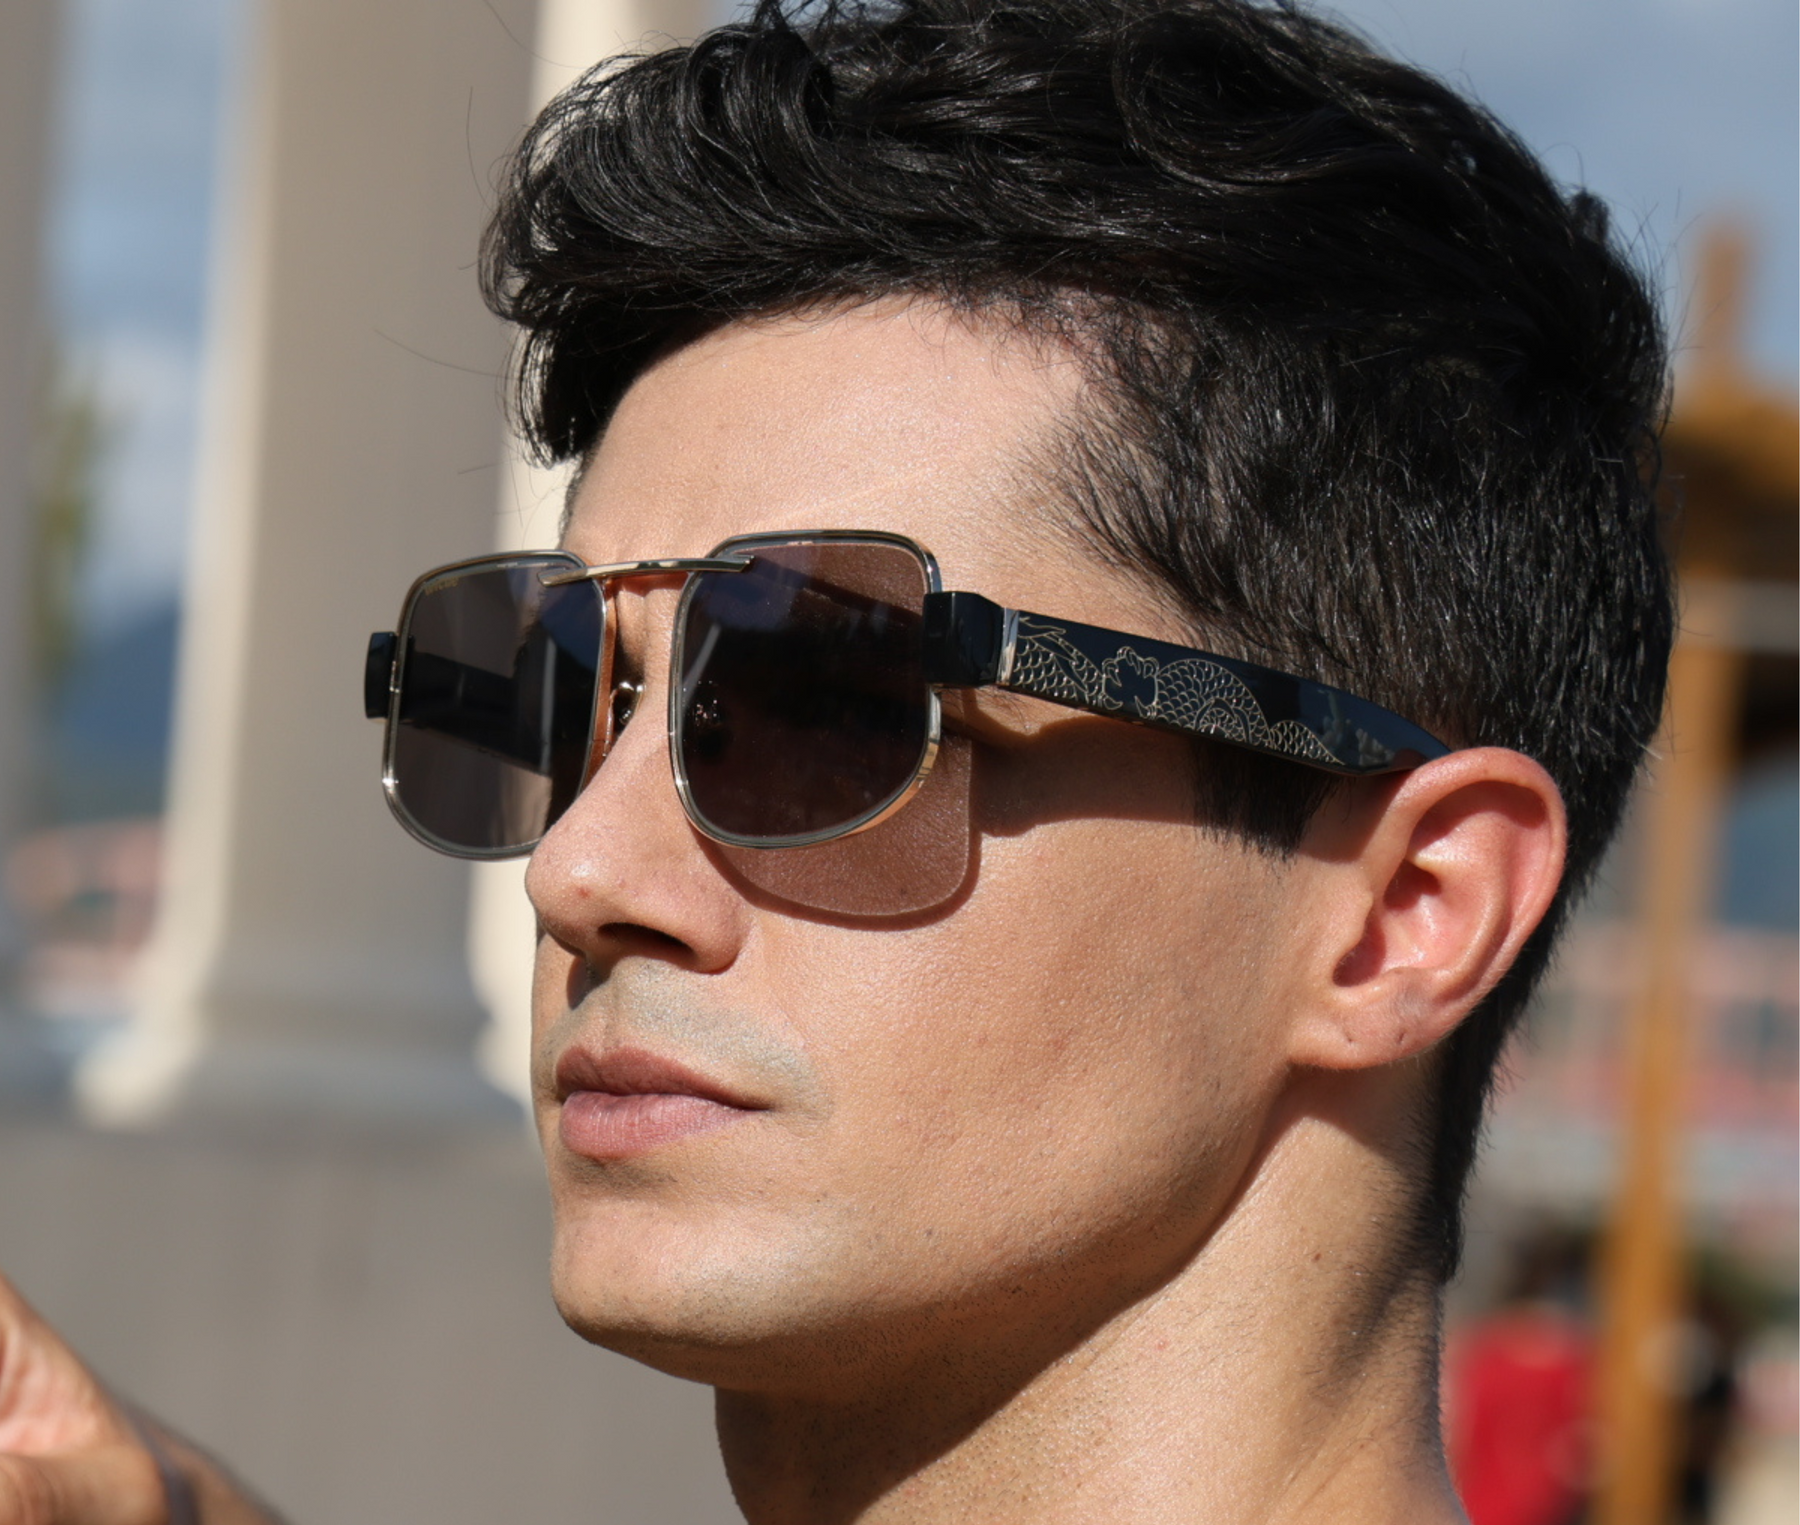 DRAGON Slide-to-dim Sunglasses